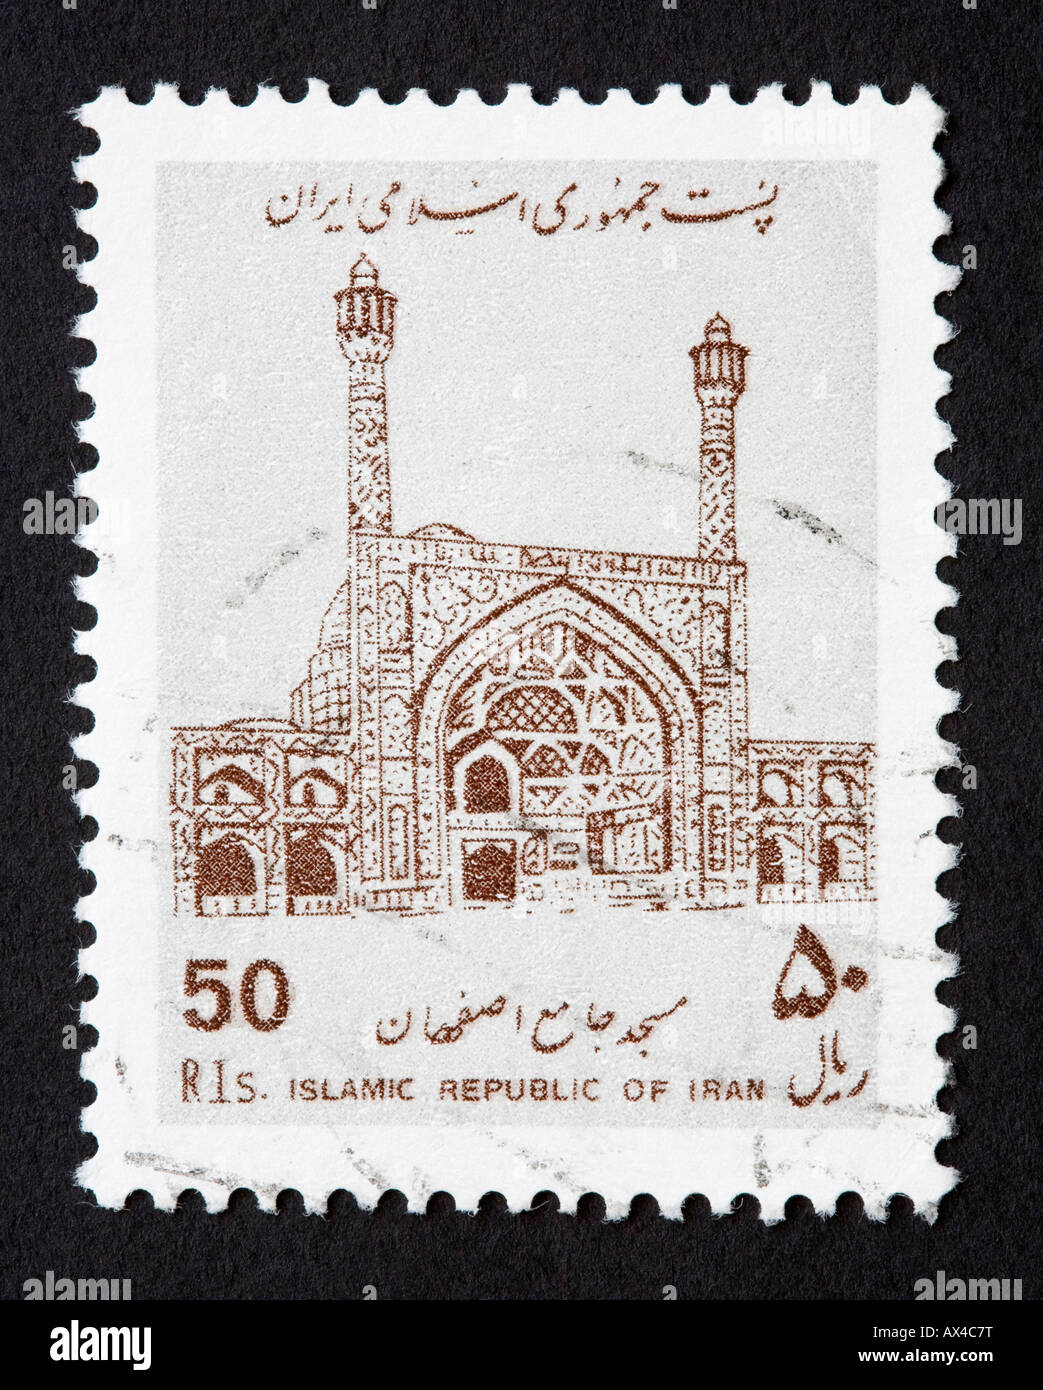 Iranian postage stamp Stock Photo - Alamy